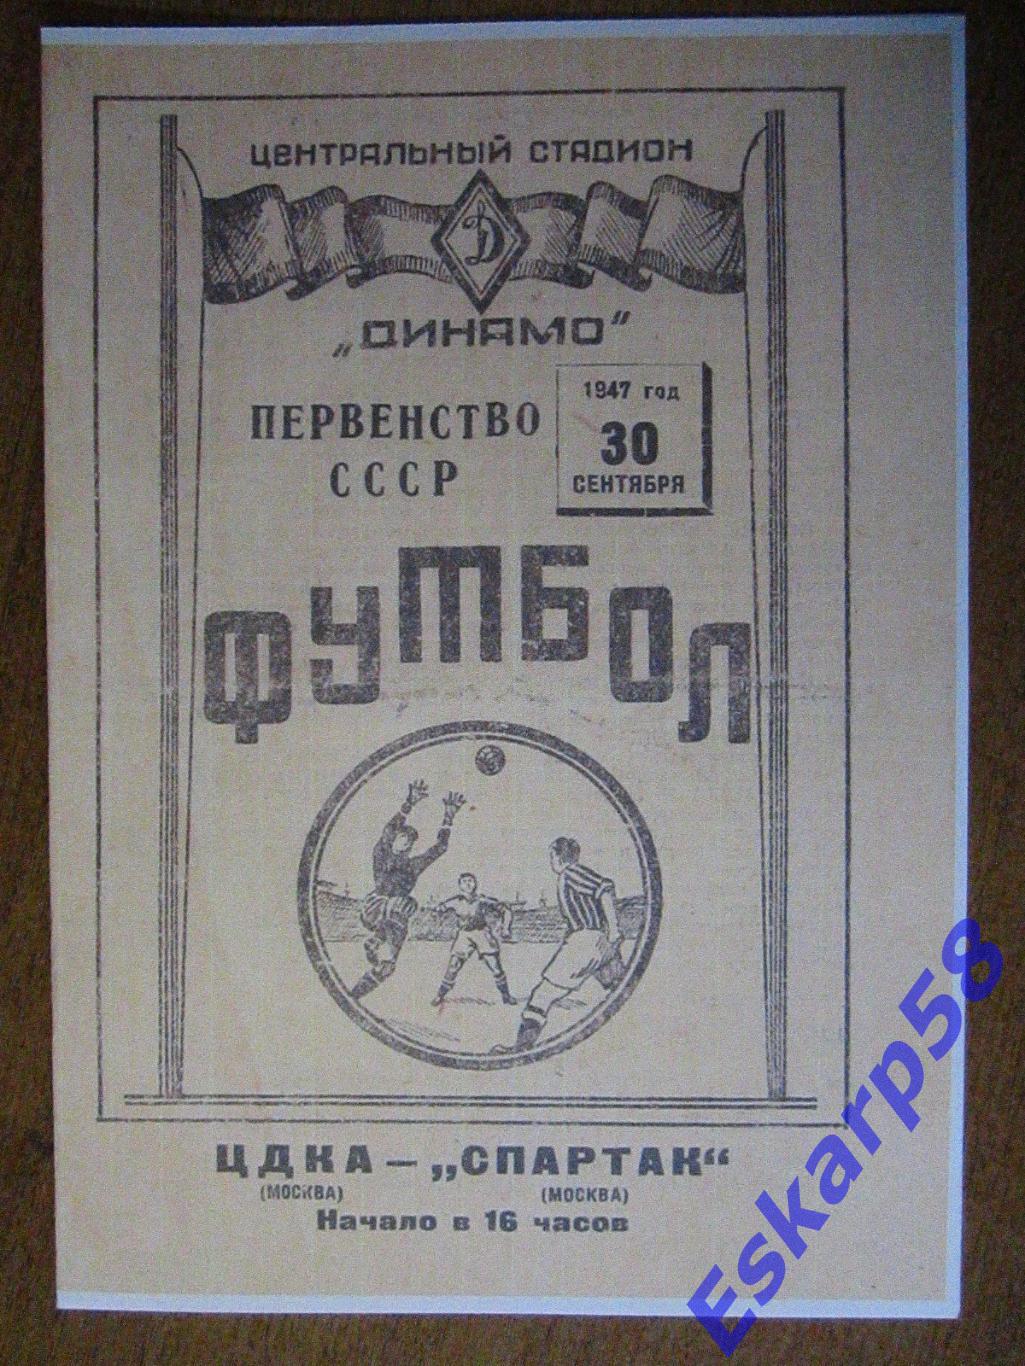 1947.ЦДКА-Спартак Москва-30.09